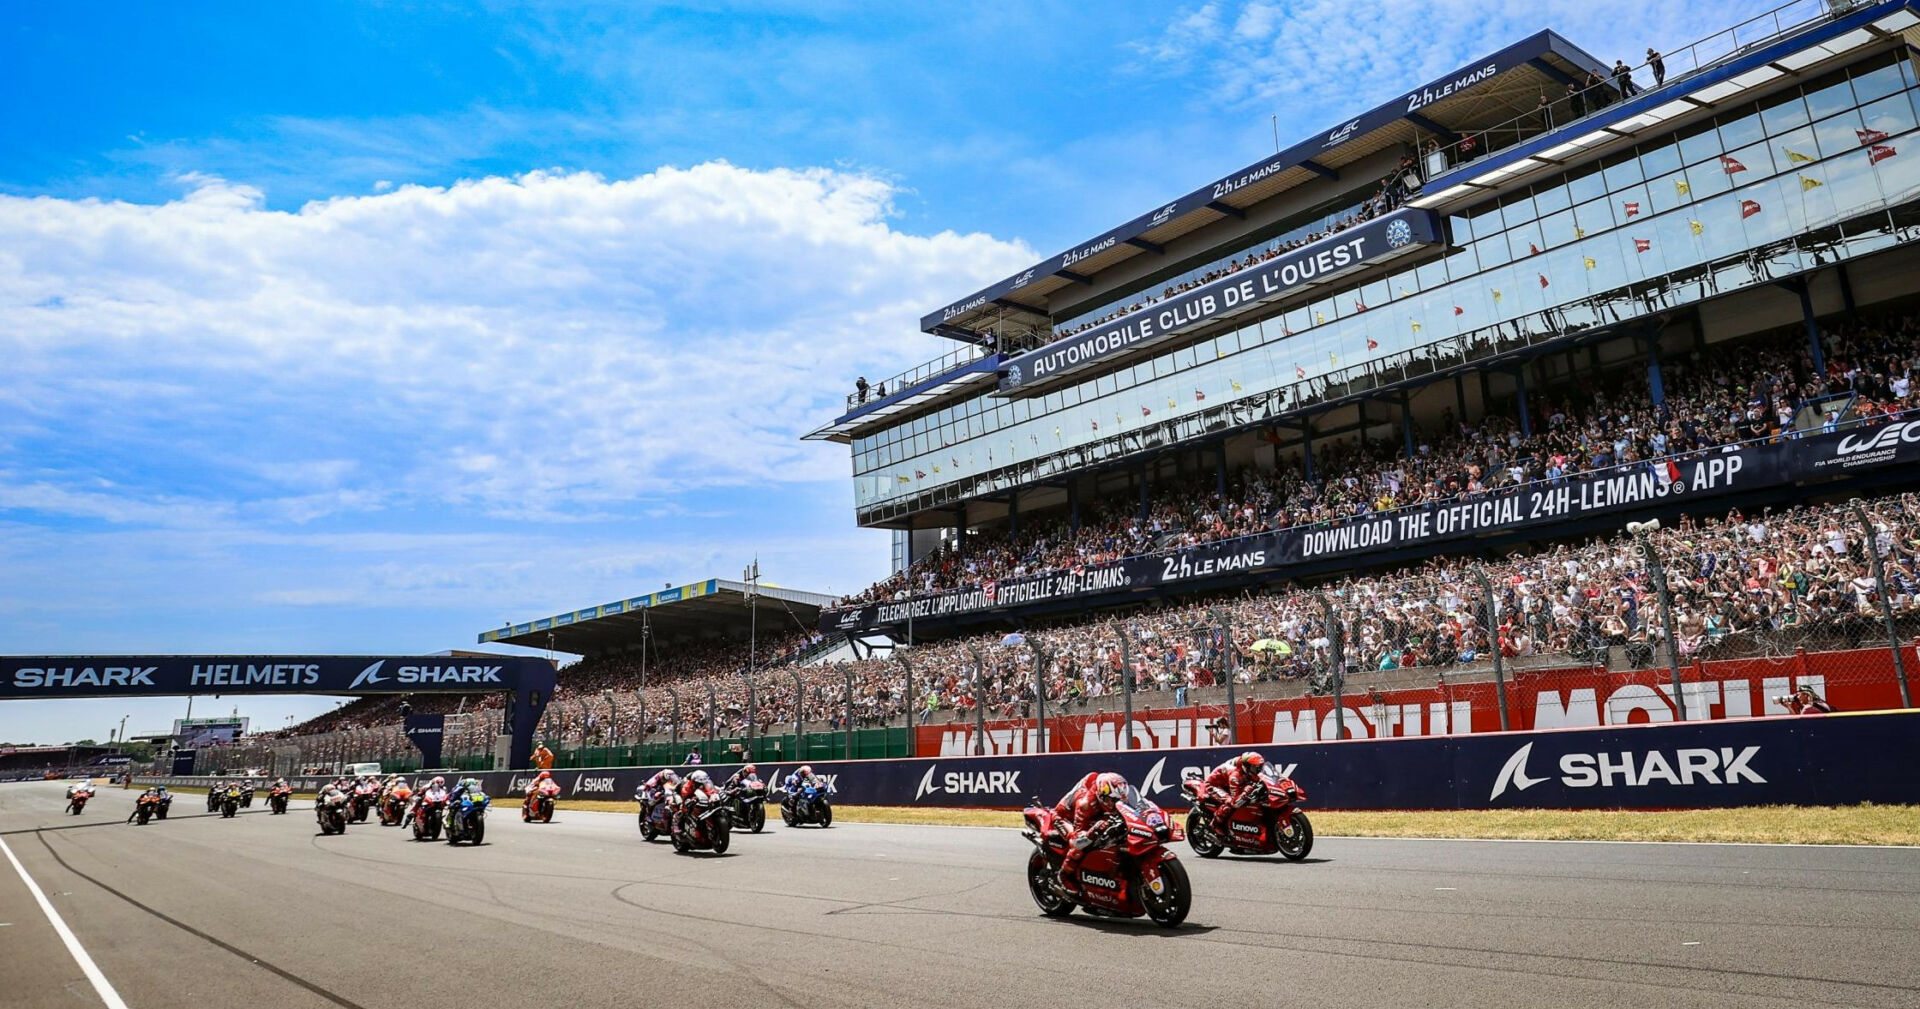 MotoGP: Le Mans To Host 1000th Grand Prix - Roadracing World